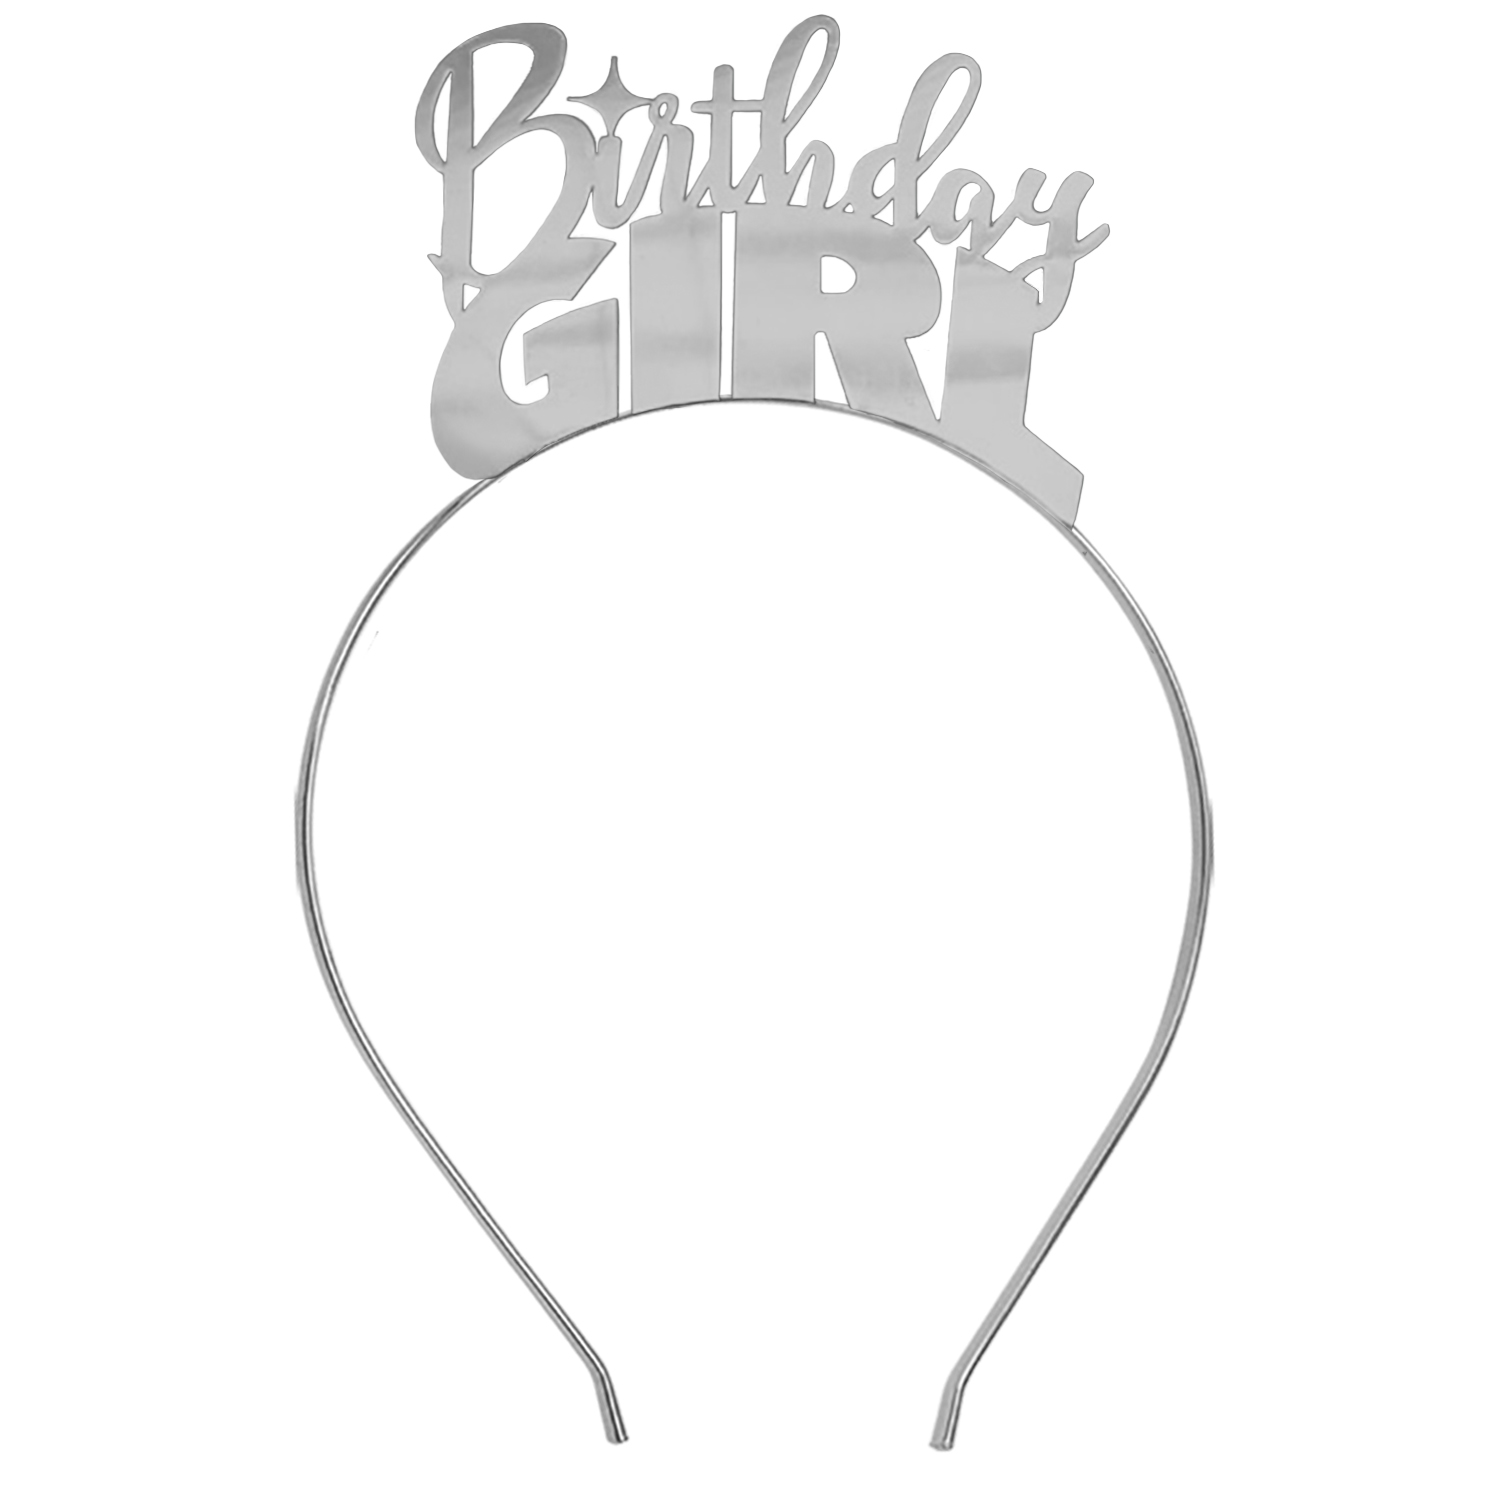 Birthday Girl Silver Headband - Birthday Supplies, Birthday Party, Birthday Ideas, Birthday Girl, Birthday Tiara, Birthday Headband, Birthday Gift - image 1 of 2